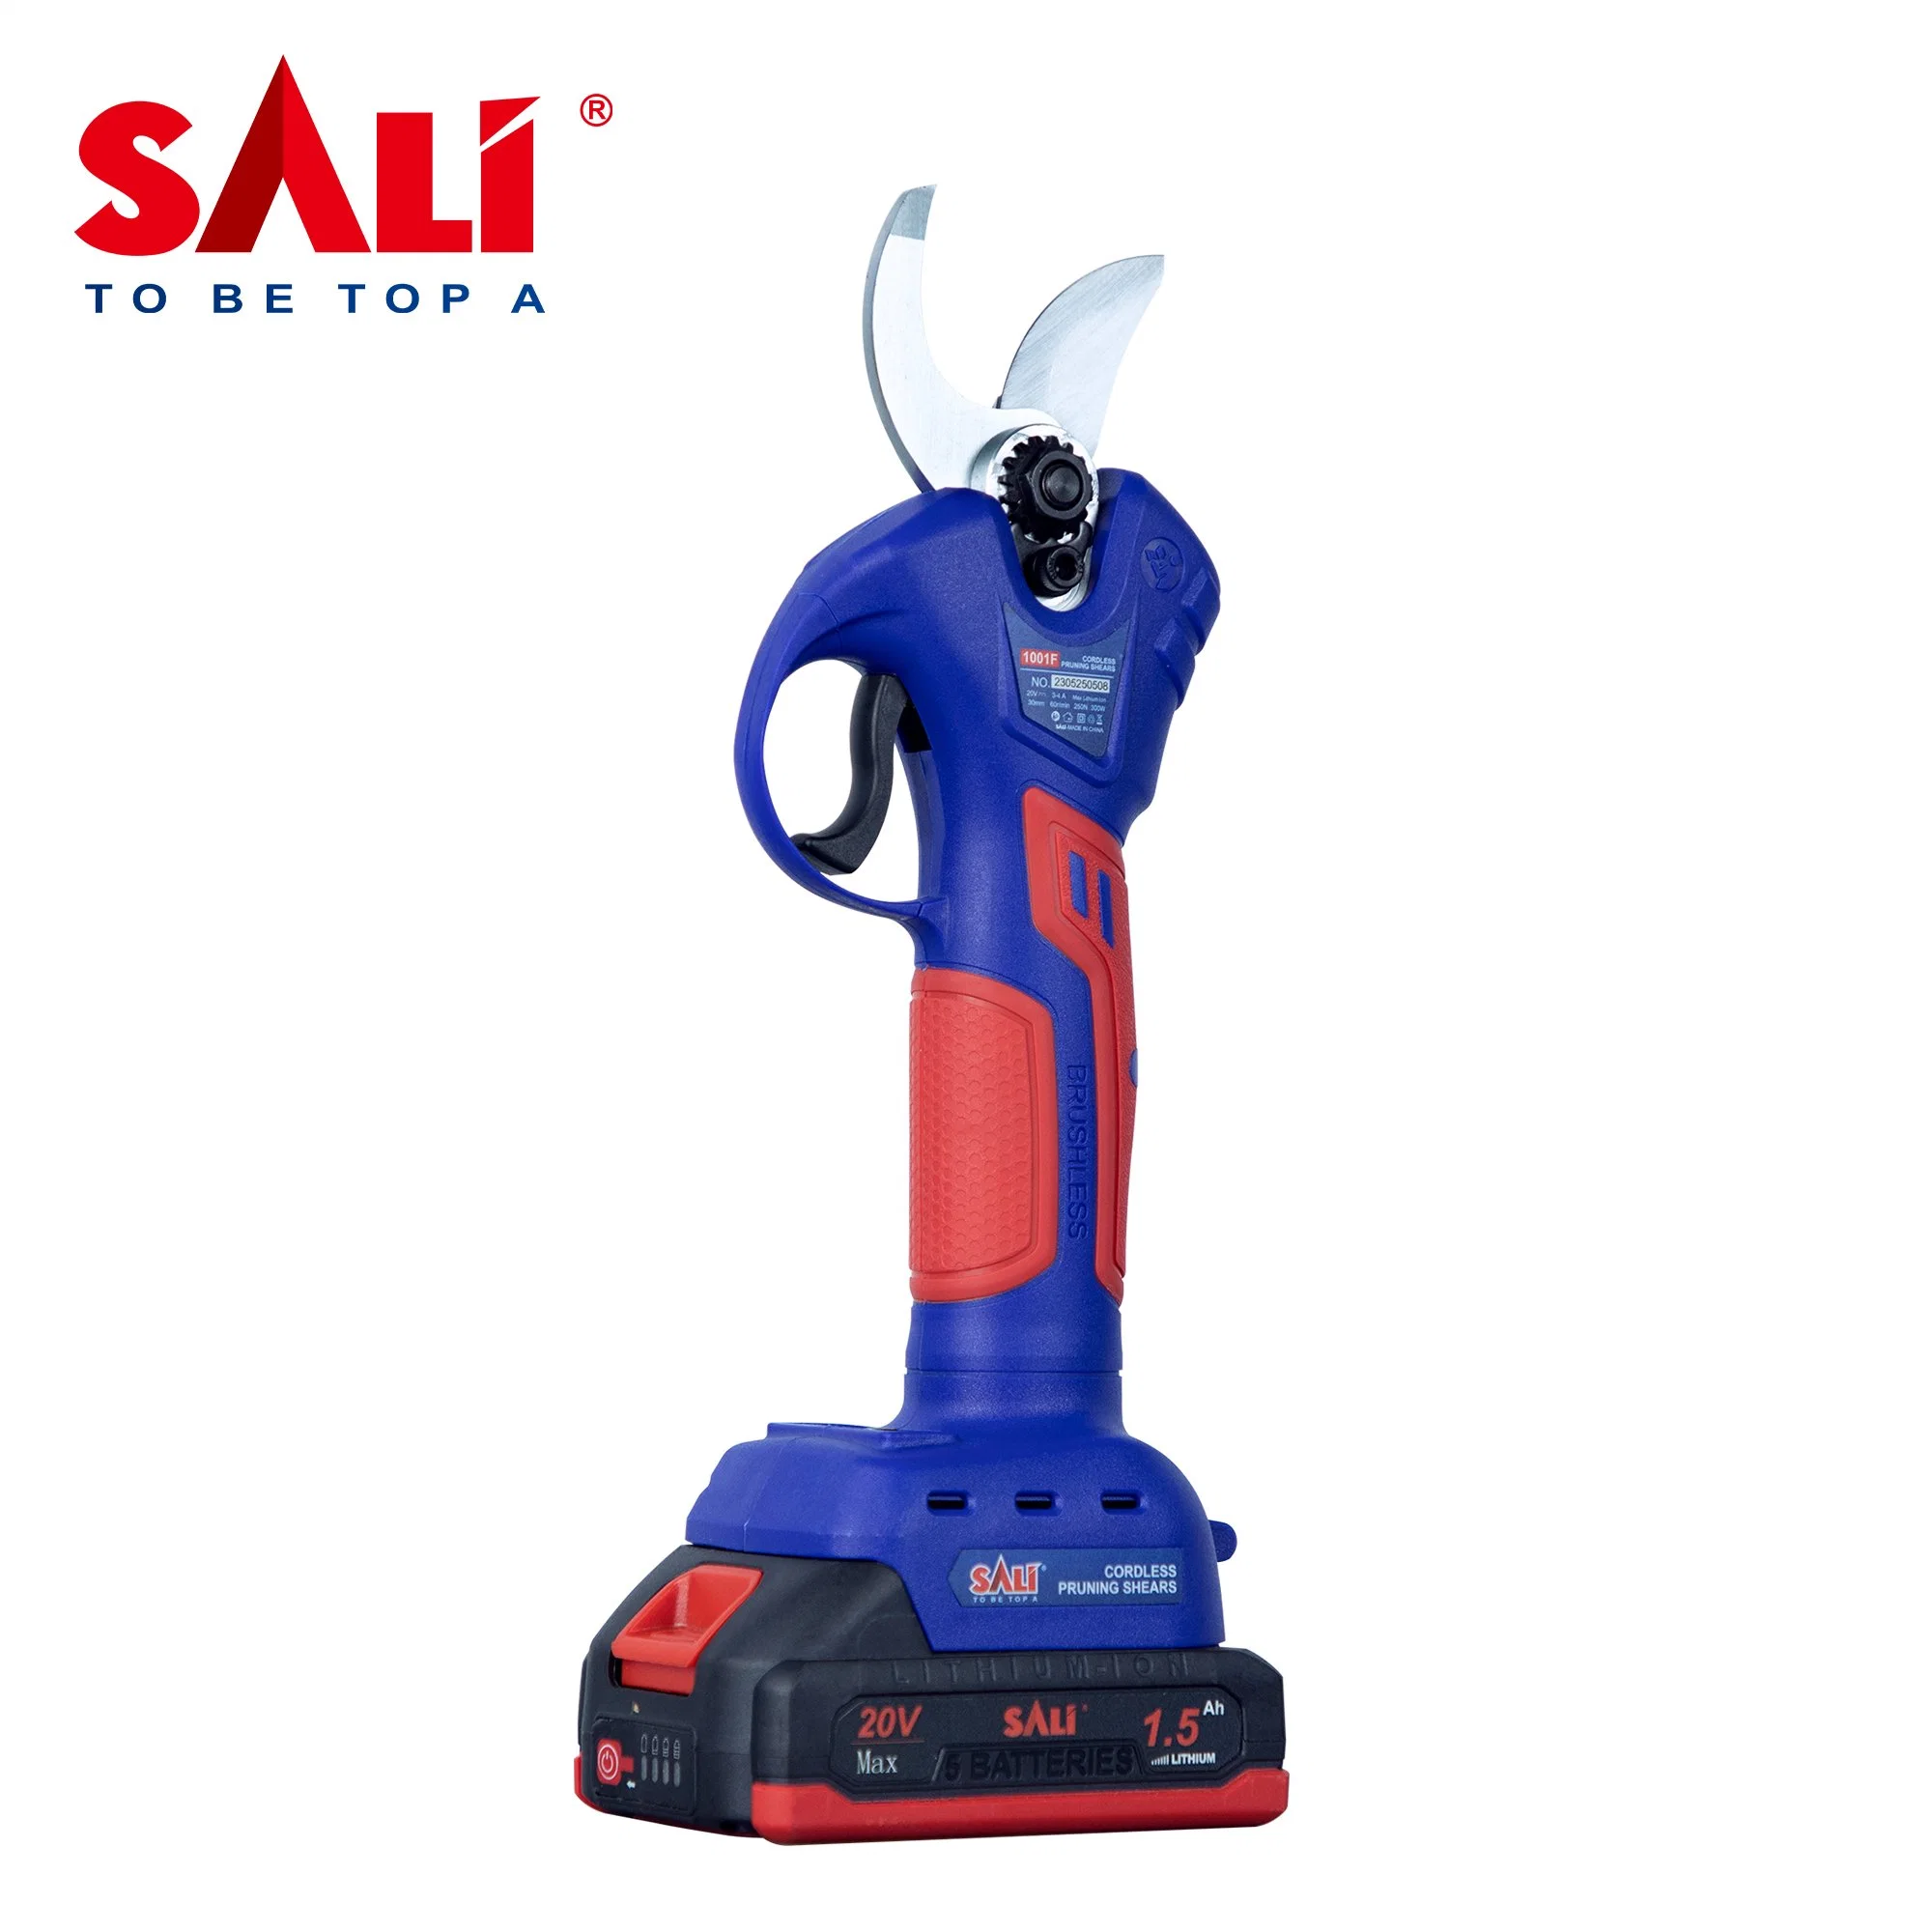 Sali 20V 1.5ah 30mm Professional Power Tools Cordless Pruning Shears